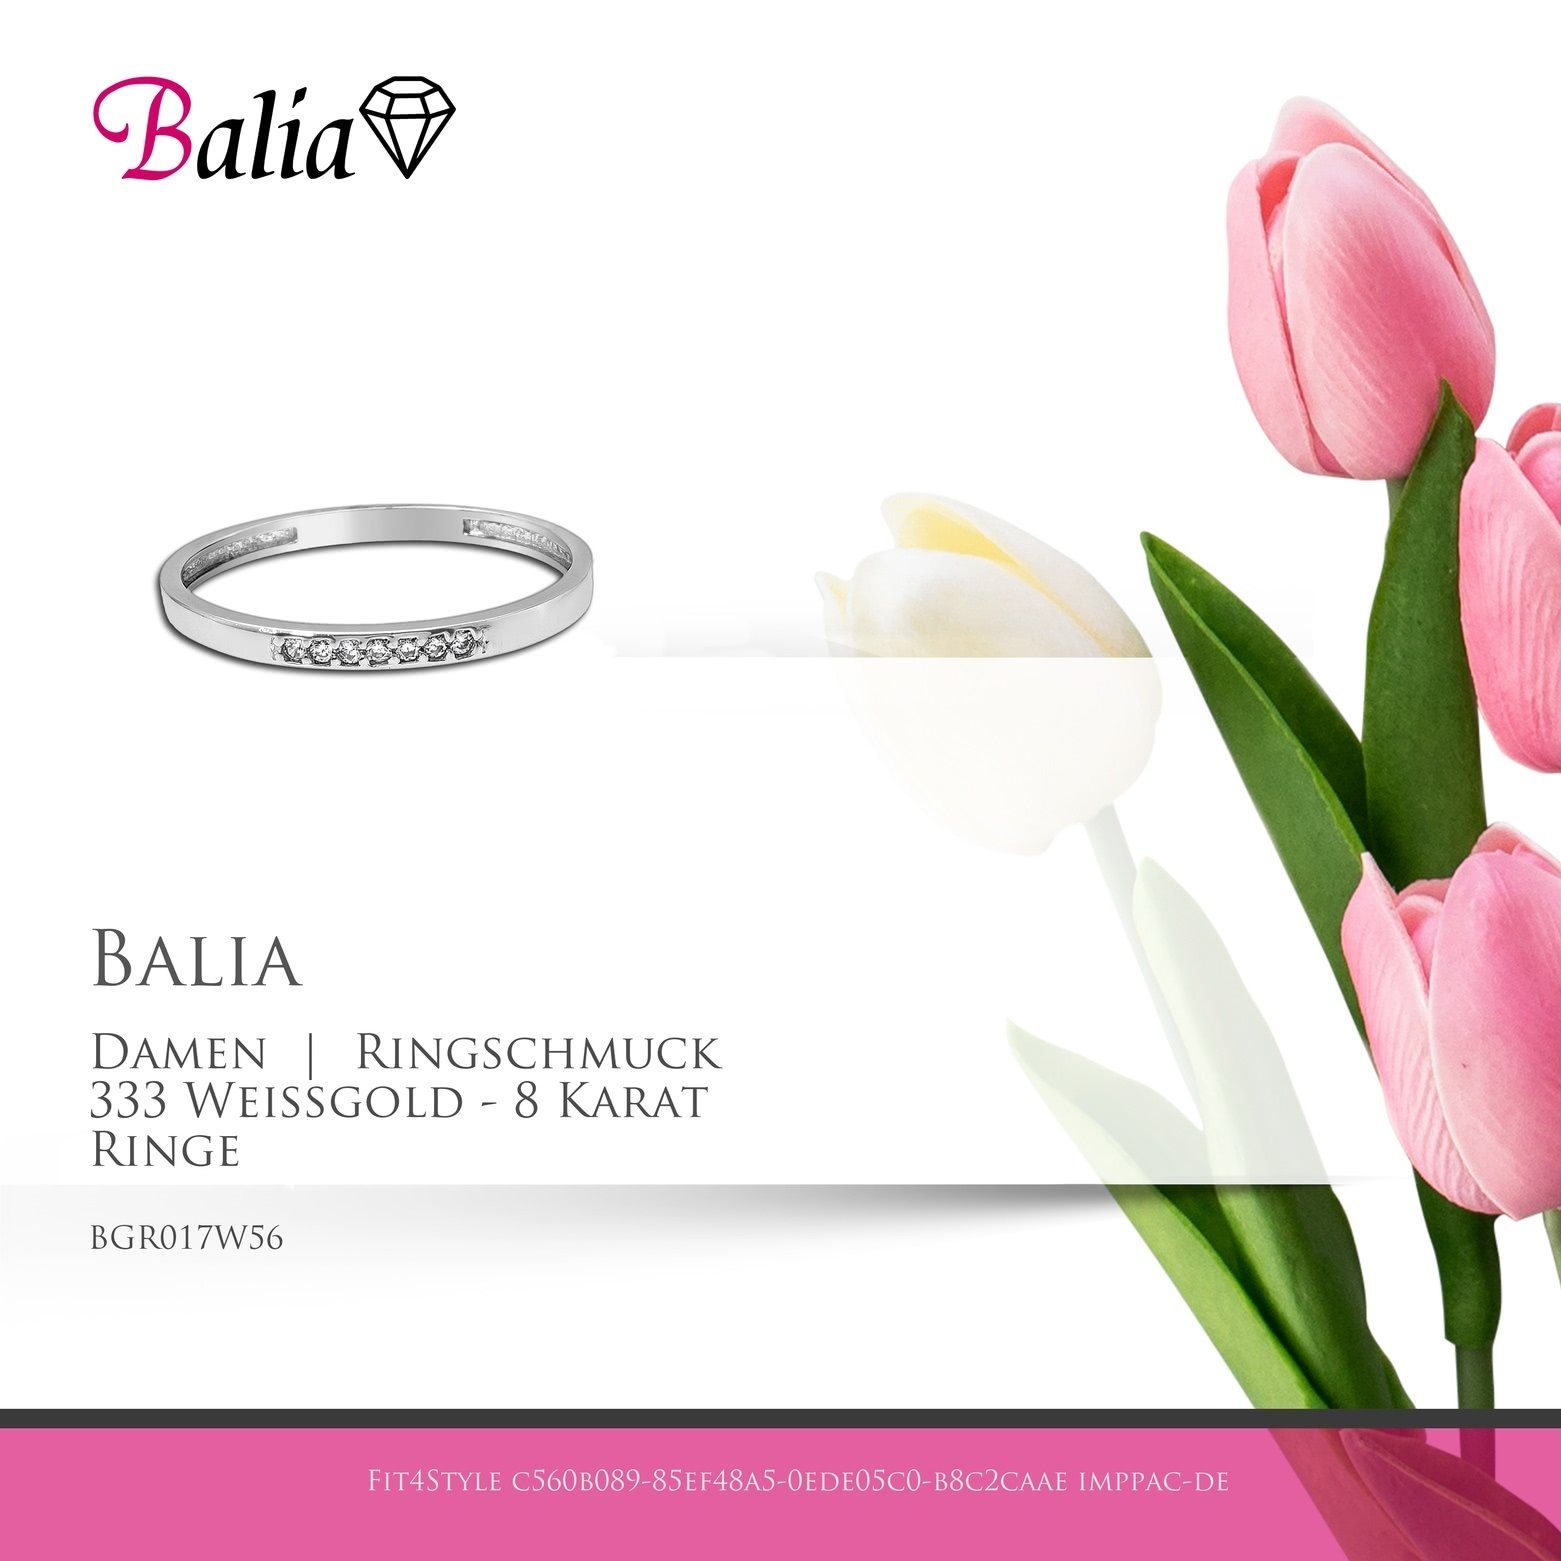 7 8 Balia Weißgold Ringe, - 8Kt Blatt Ring Zirkonias, Goldring Karat 56 Balia Damen Gold (Fingerring), 333 Gr.56 (17,8) Damen